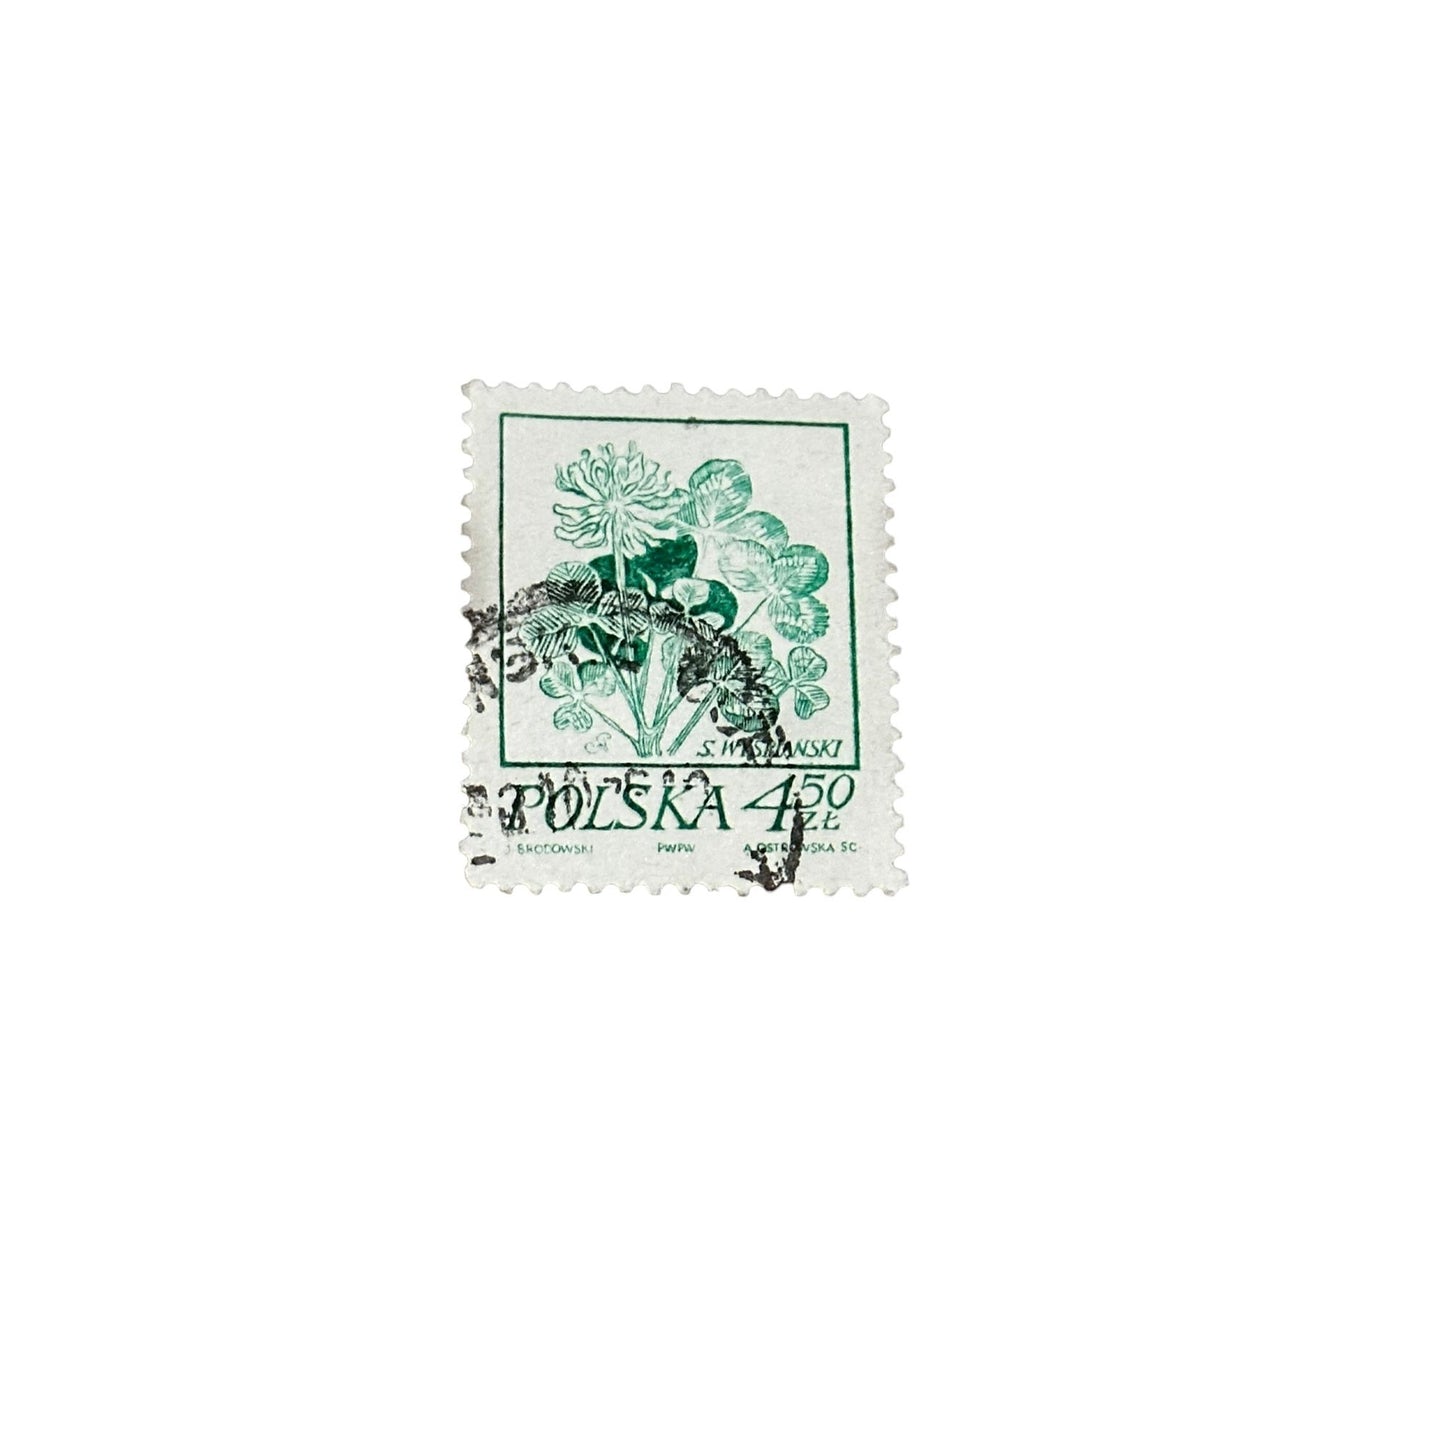 Vintage Polska Stamp Collection 22pcs Historic Gems Perfect for Philatelists